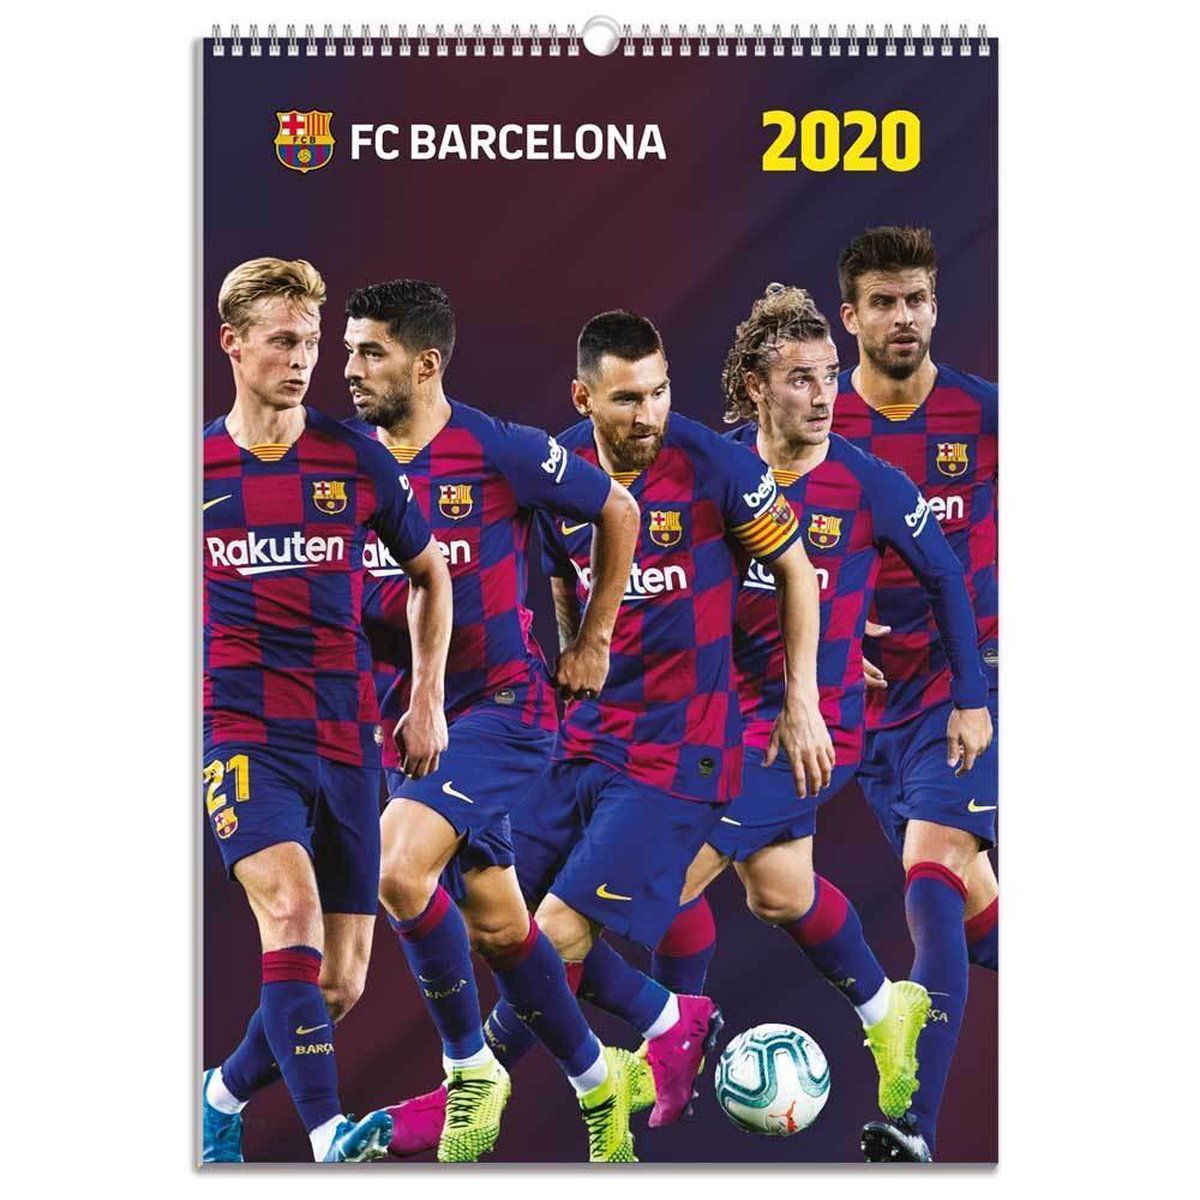 Erik 91 x 61 cm Poster FC Barcelona 2019/2020 Messi 